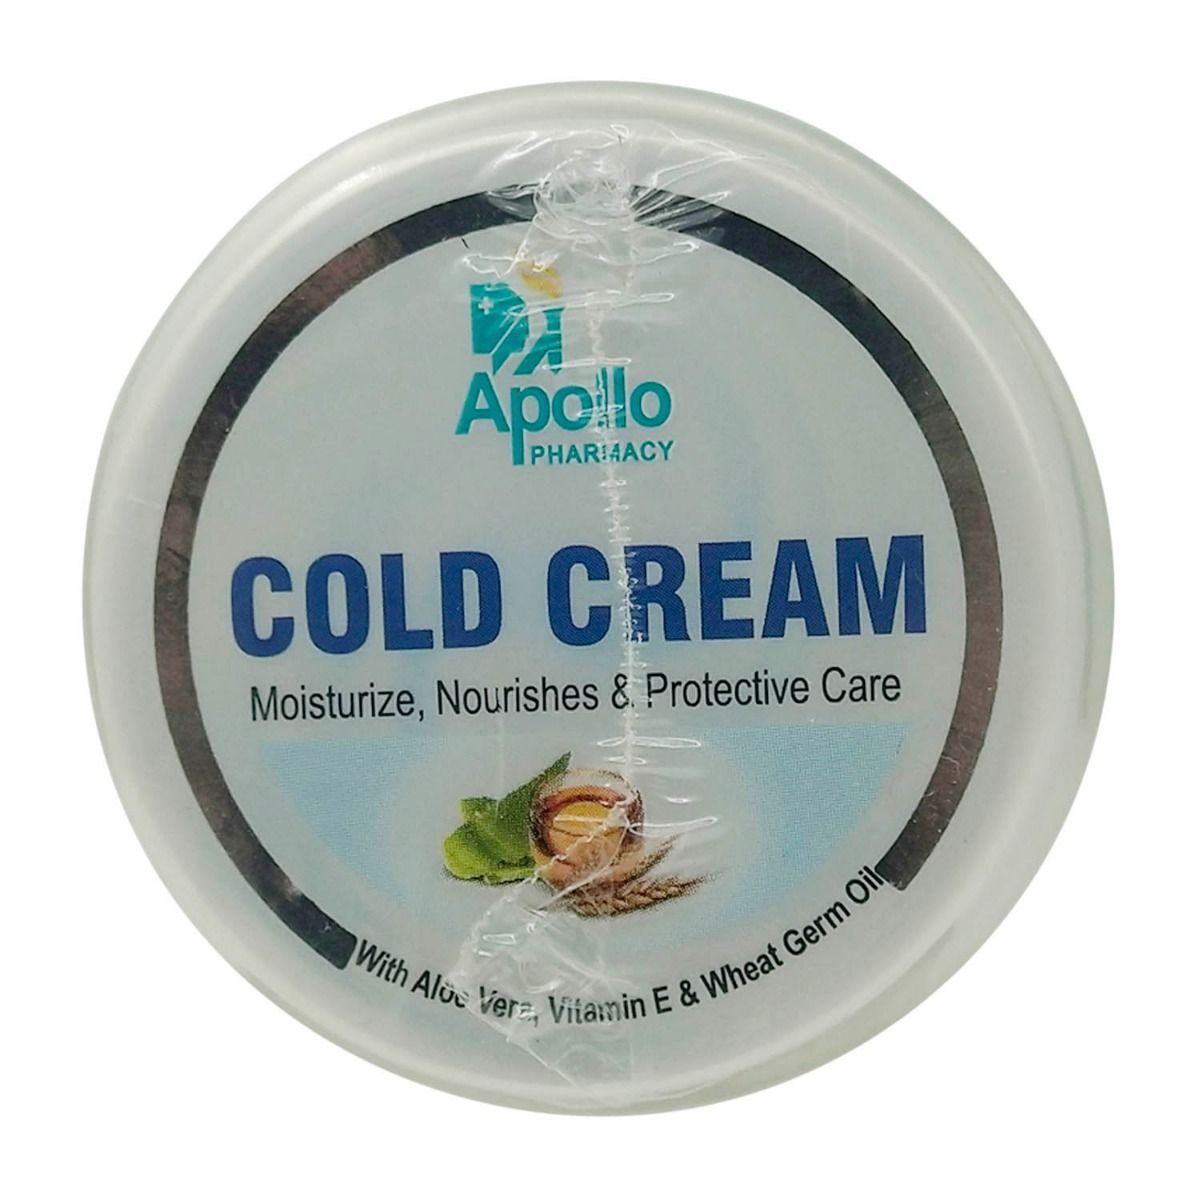 Apollo Pharmacy Cold Cream, 50 gm, Pack of 1 